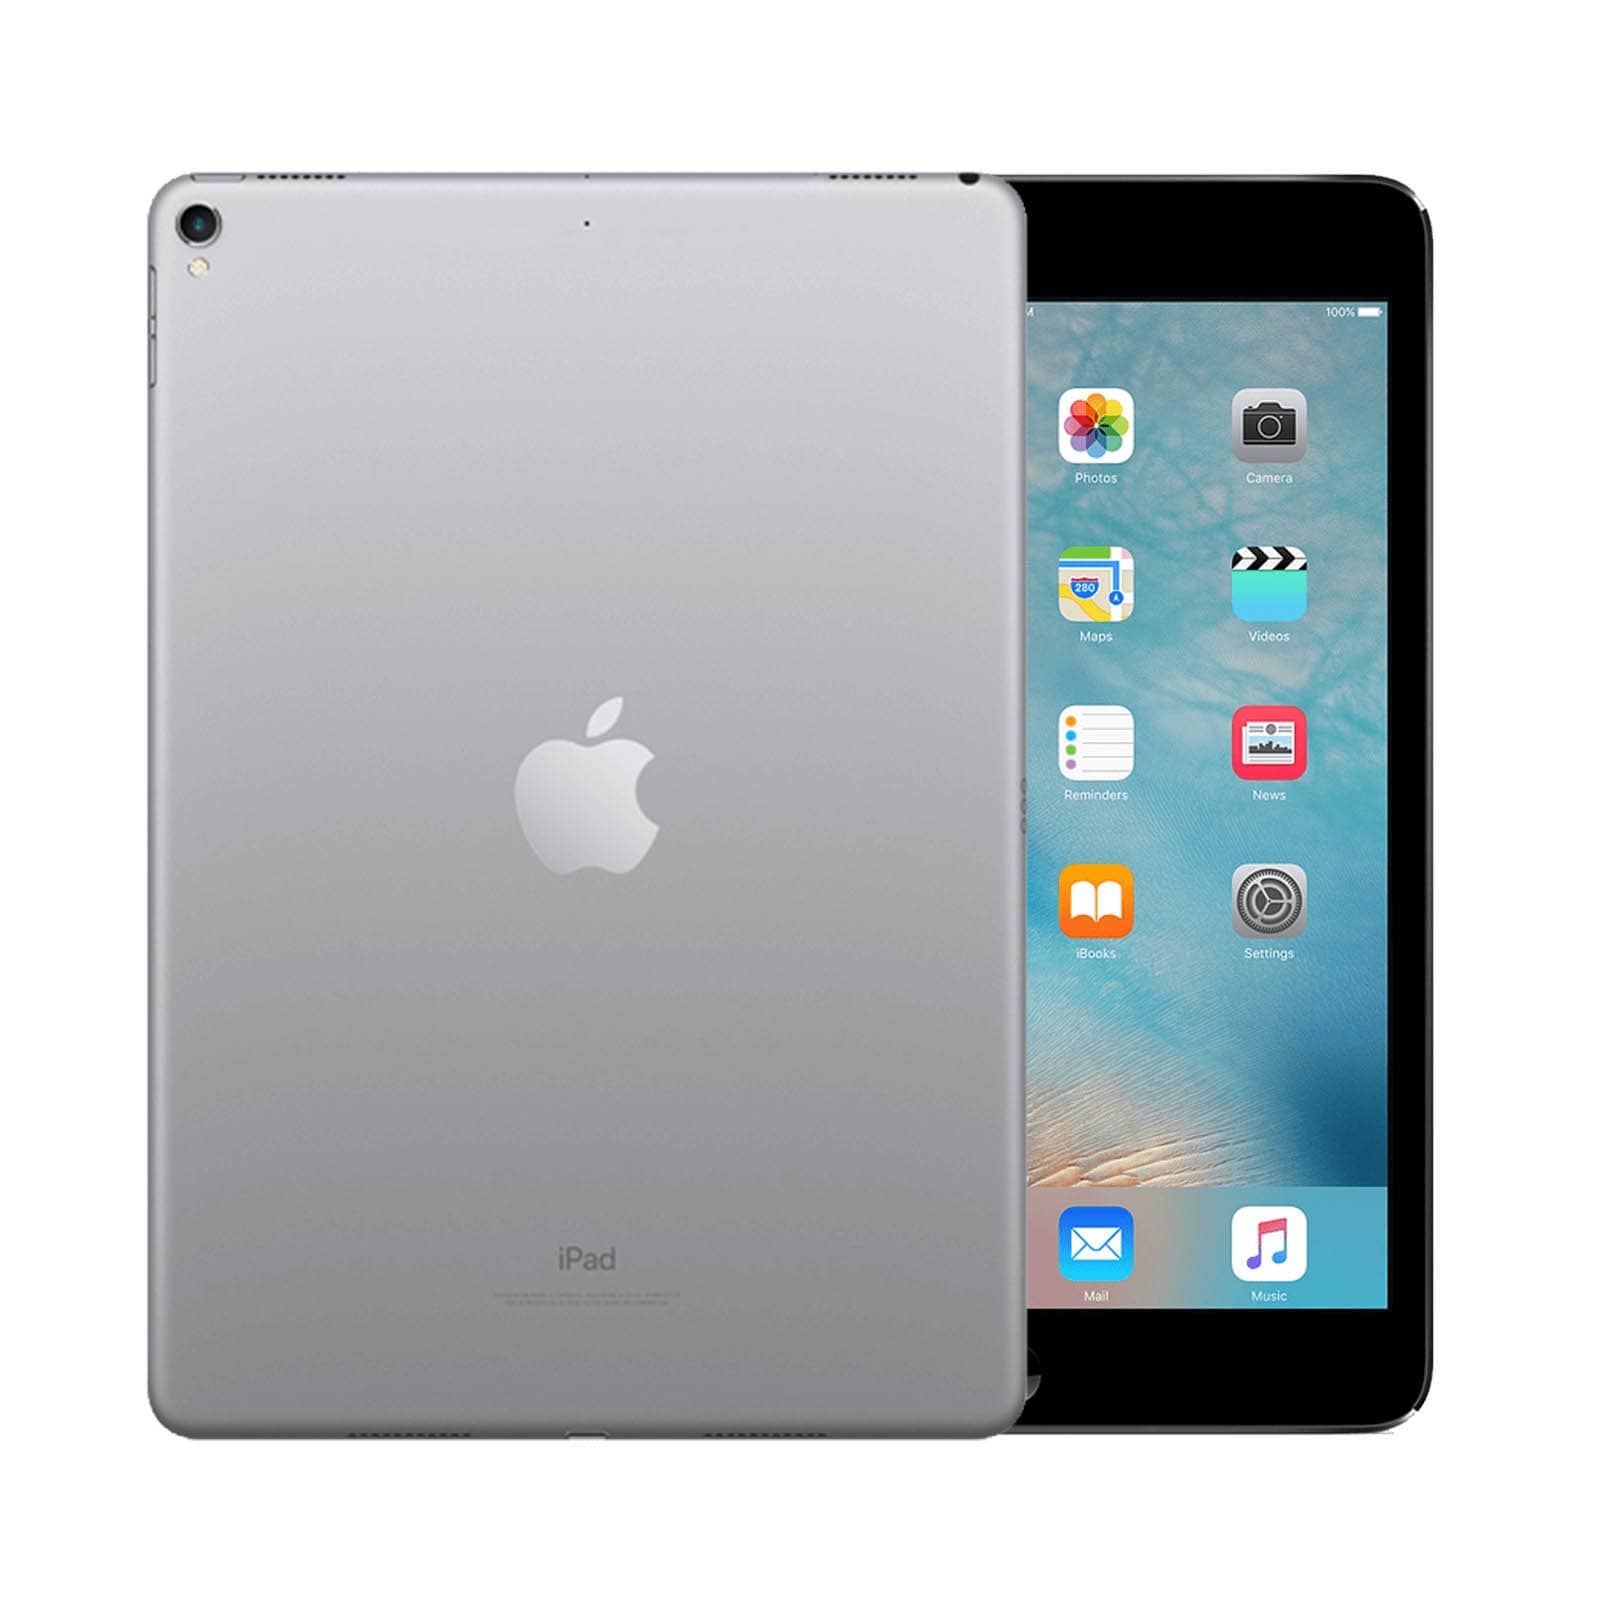 iPad Pro 9.7 Inch 32GB Space Grey Good - WiFi 32GB Space Grey Good